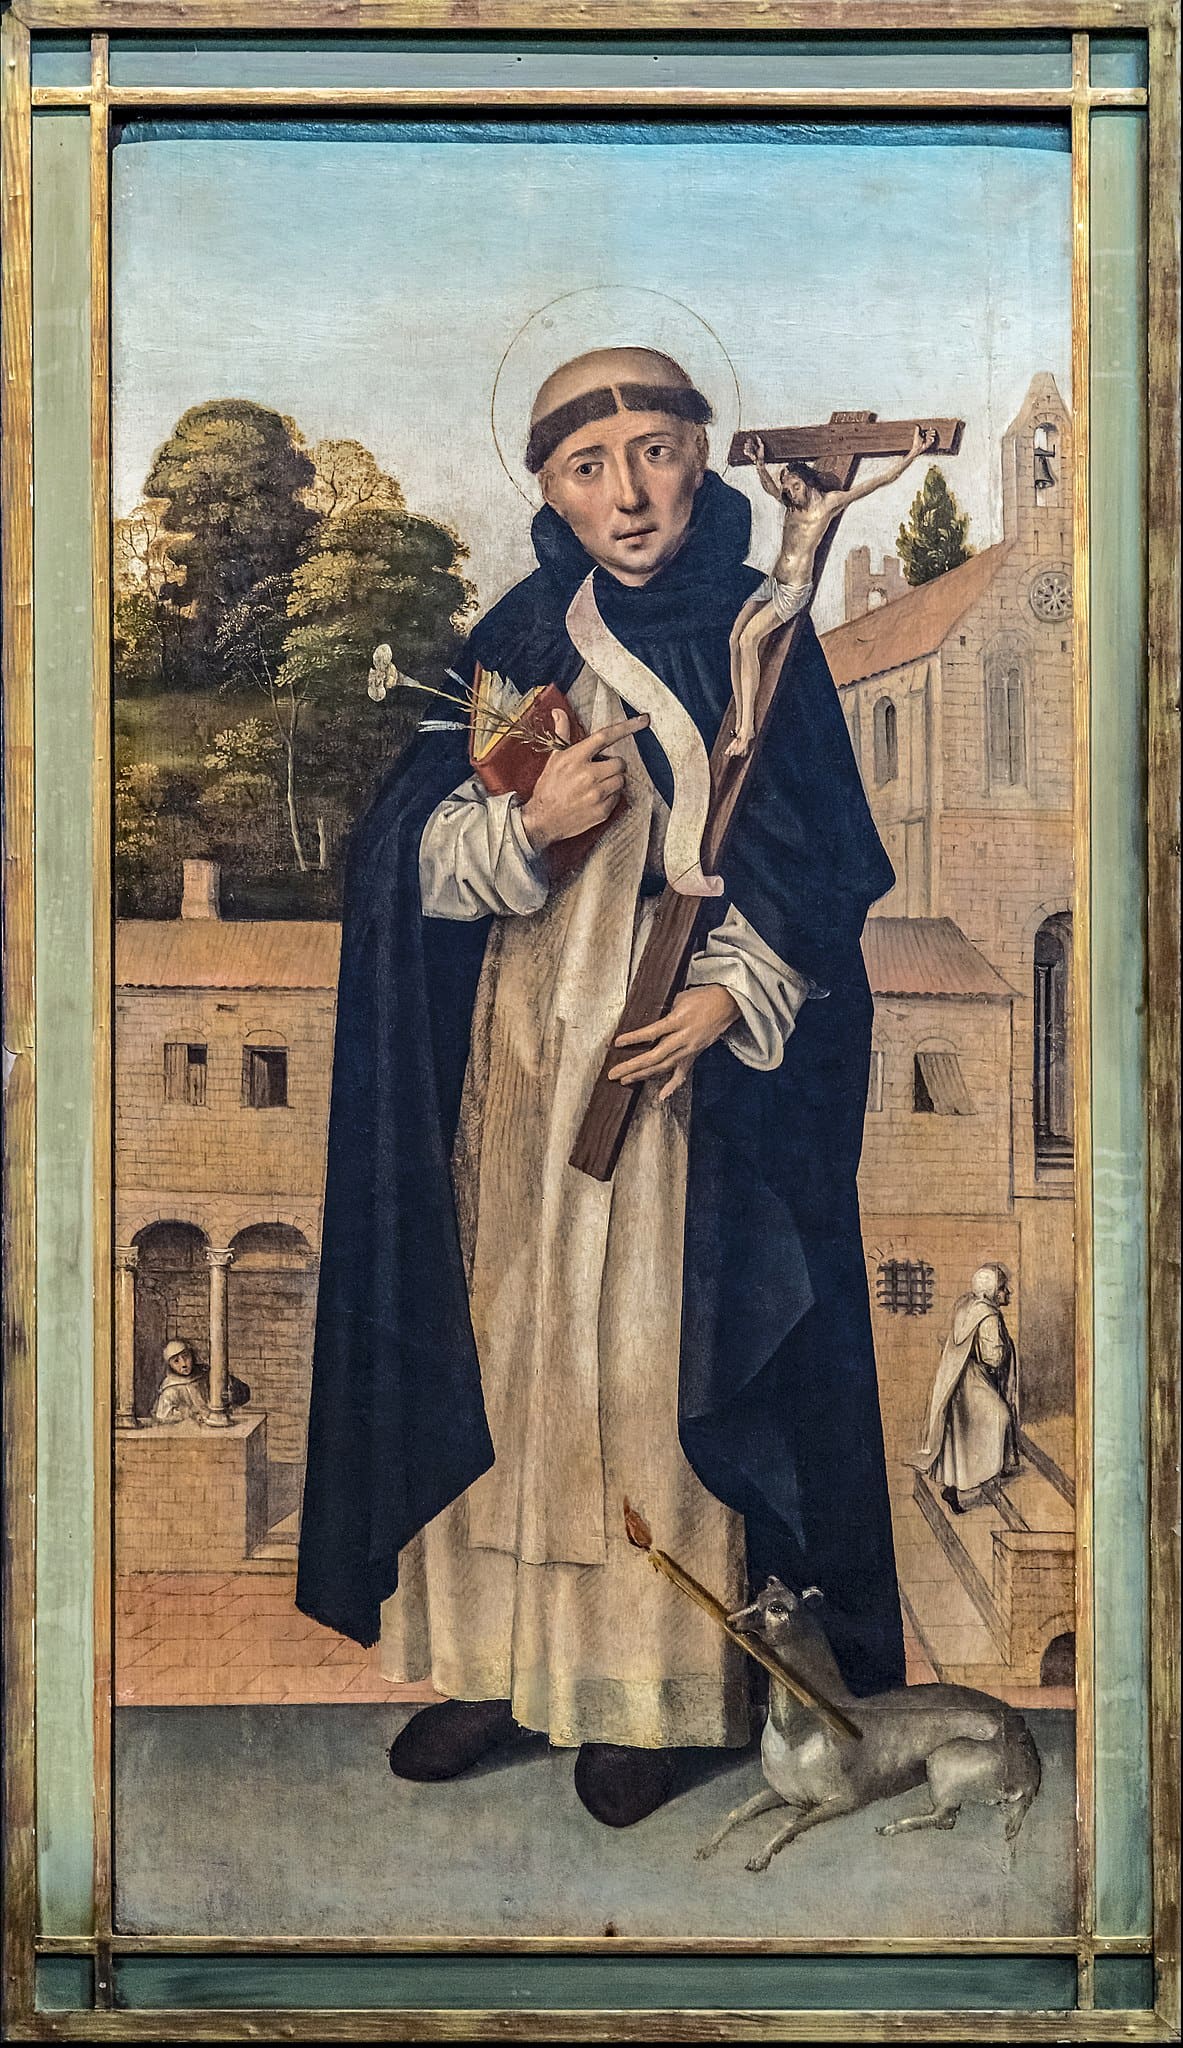 Portret sv. Dominika, s raspelom i psom s bakljom – referenca na lomaču inkvizicije